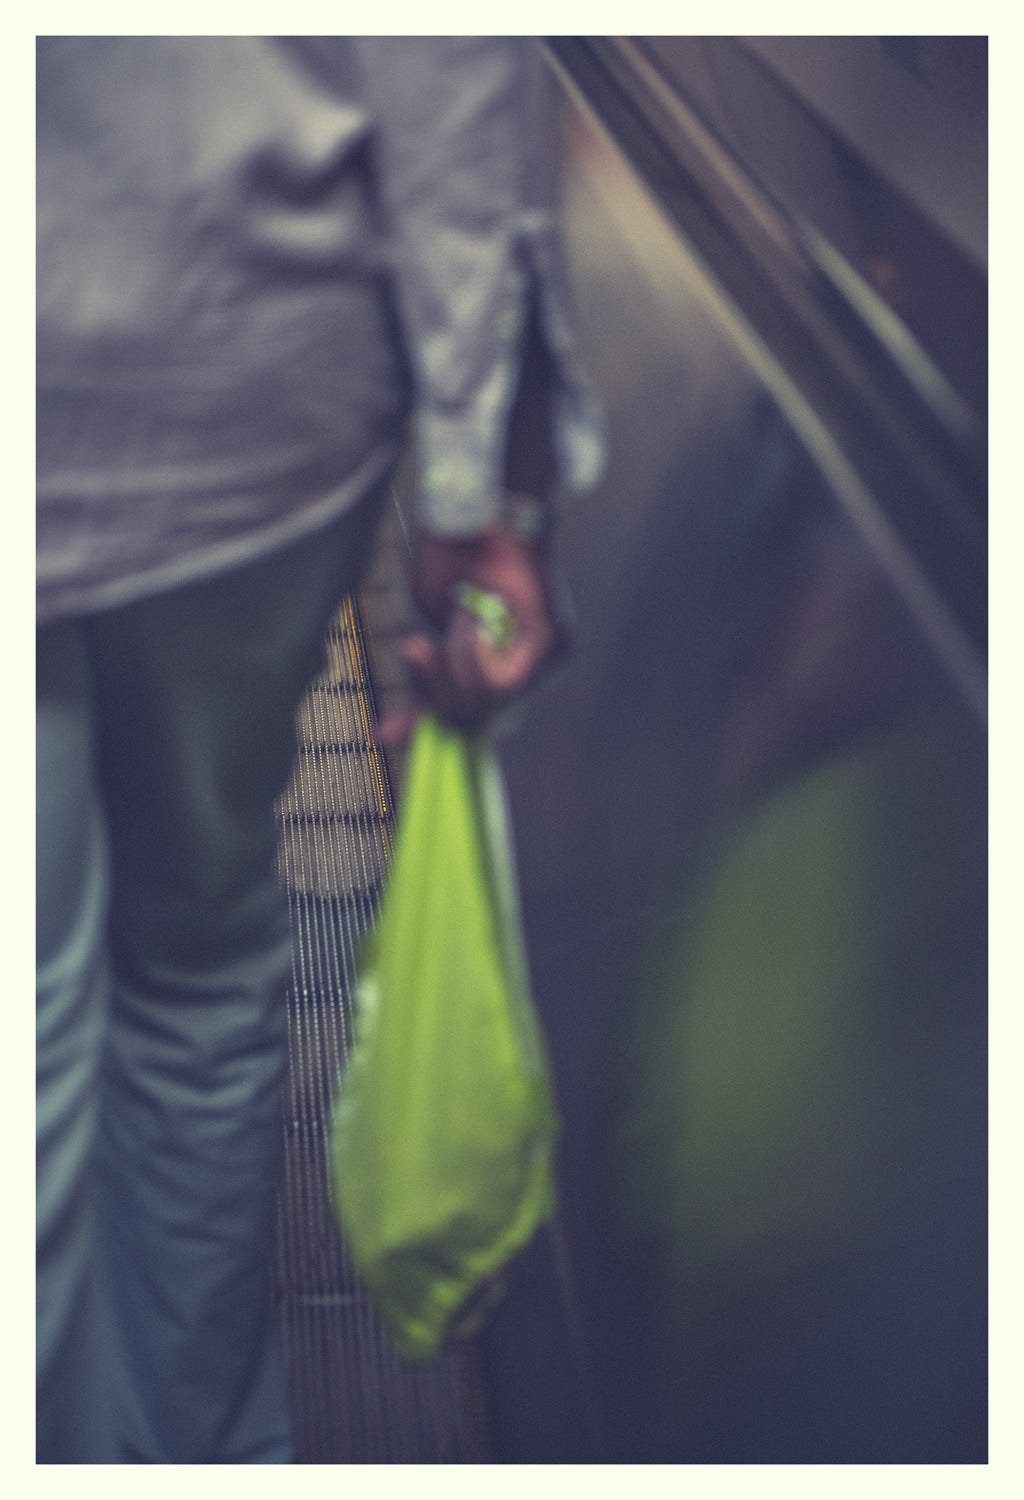 Man carrying a shopping bag.